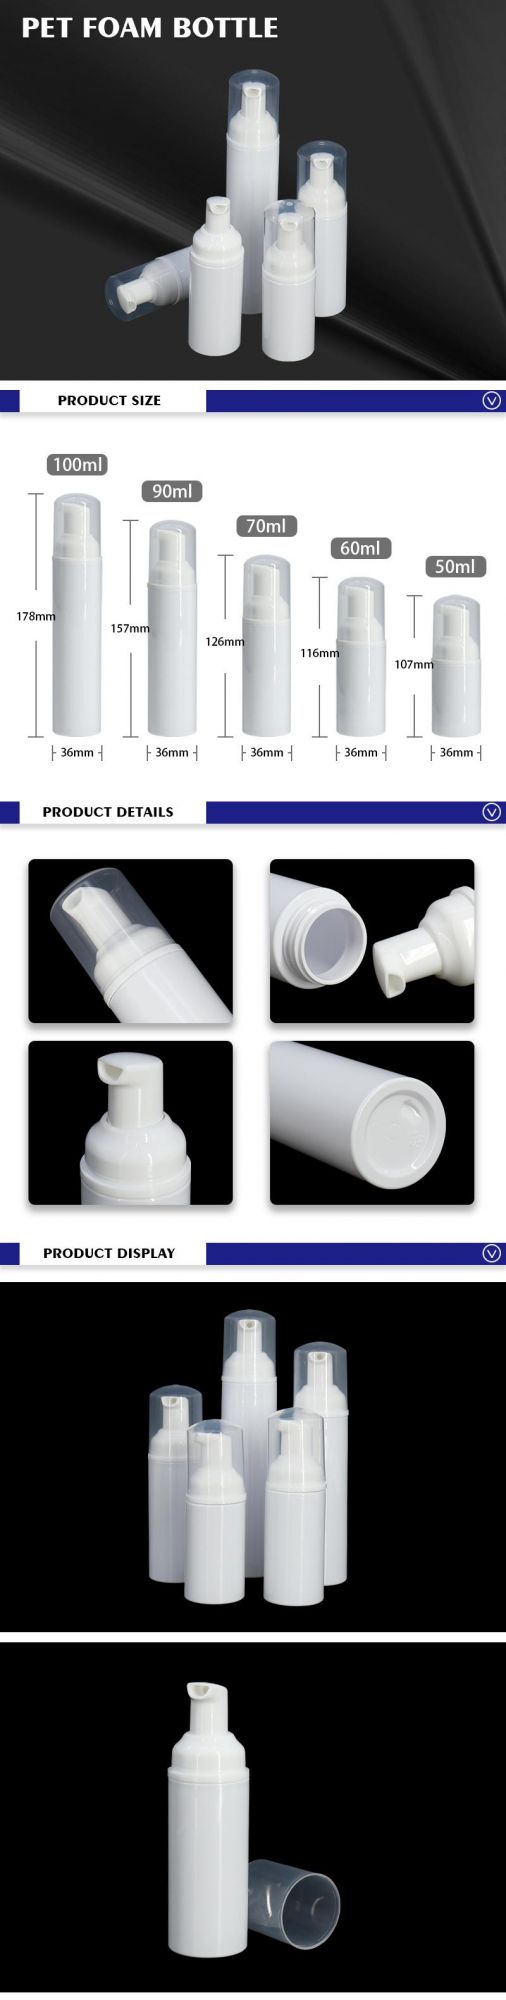 High Quality Foaming Hand Soap Pet Bottle 100ml 90ml 70ml 60ml 50ml Plastic Foaming Pump Bottles with Dispenser